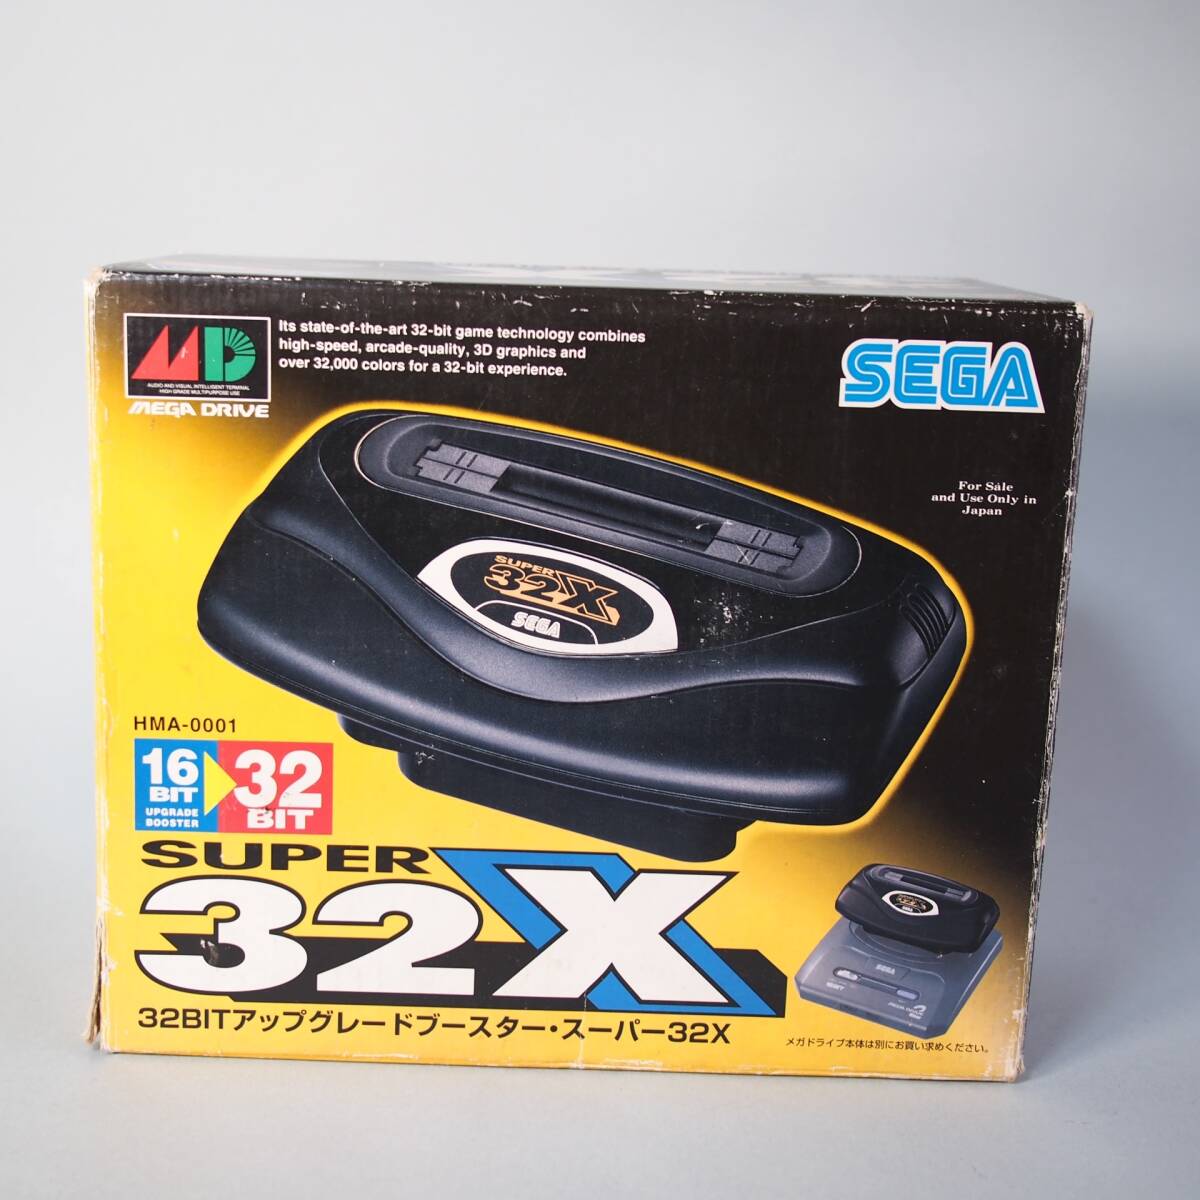  super 32X box attaching Sega Mega Drive operation verification settled SUPER 32X SEGA MEGA DRIVE B5